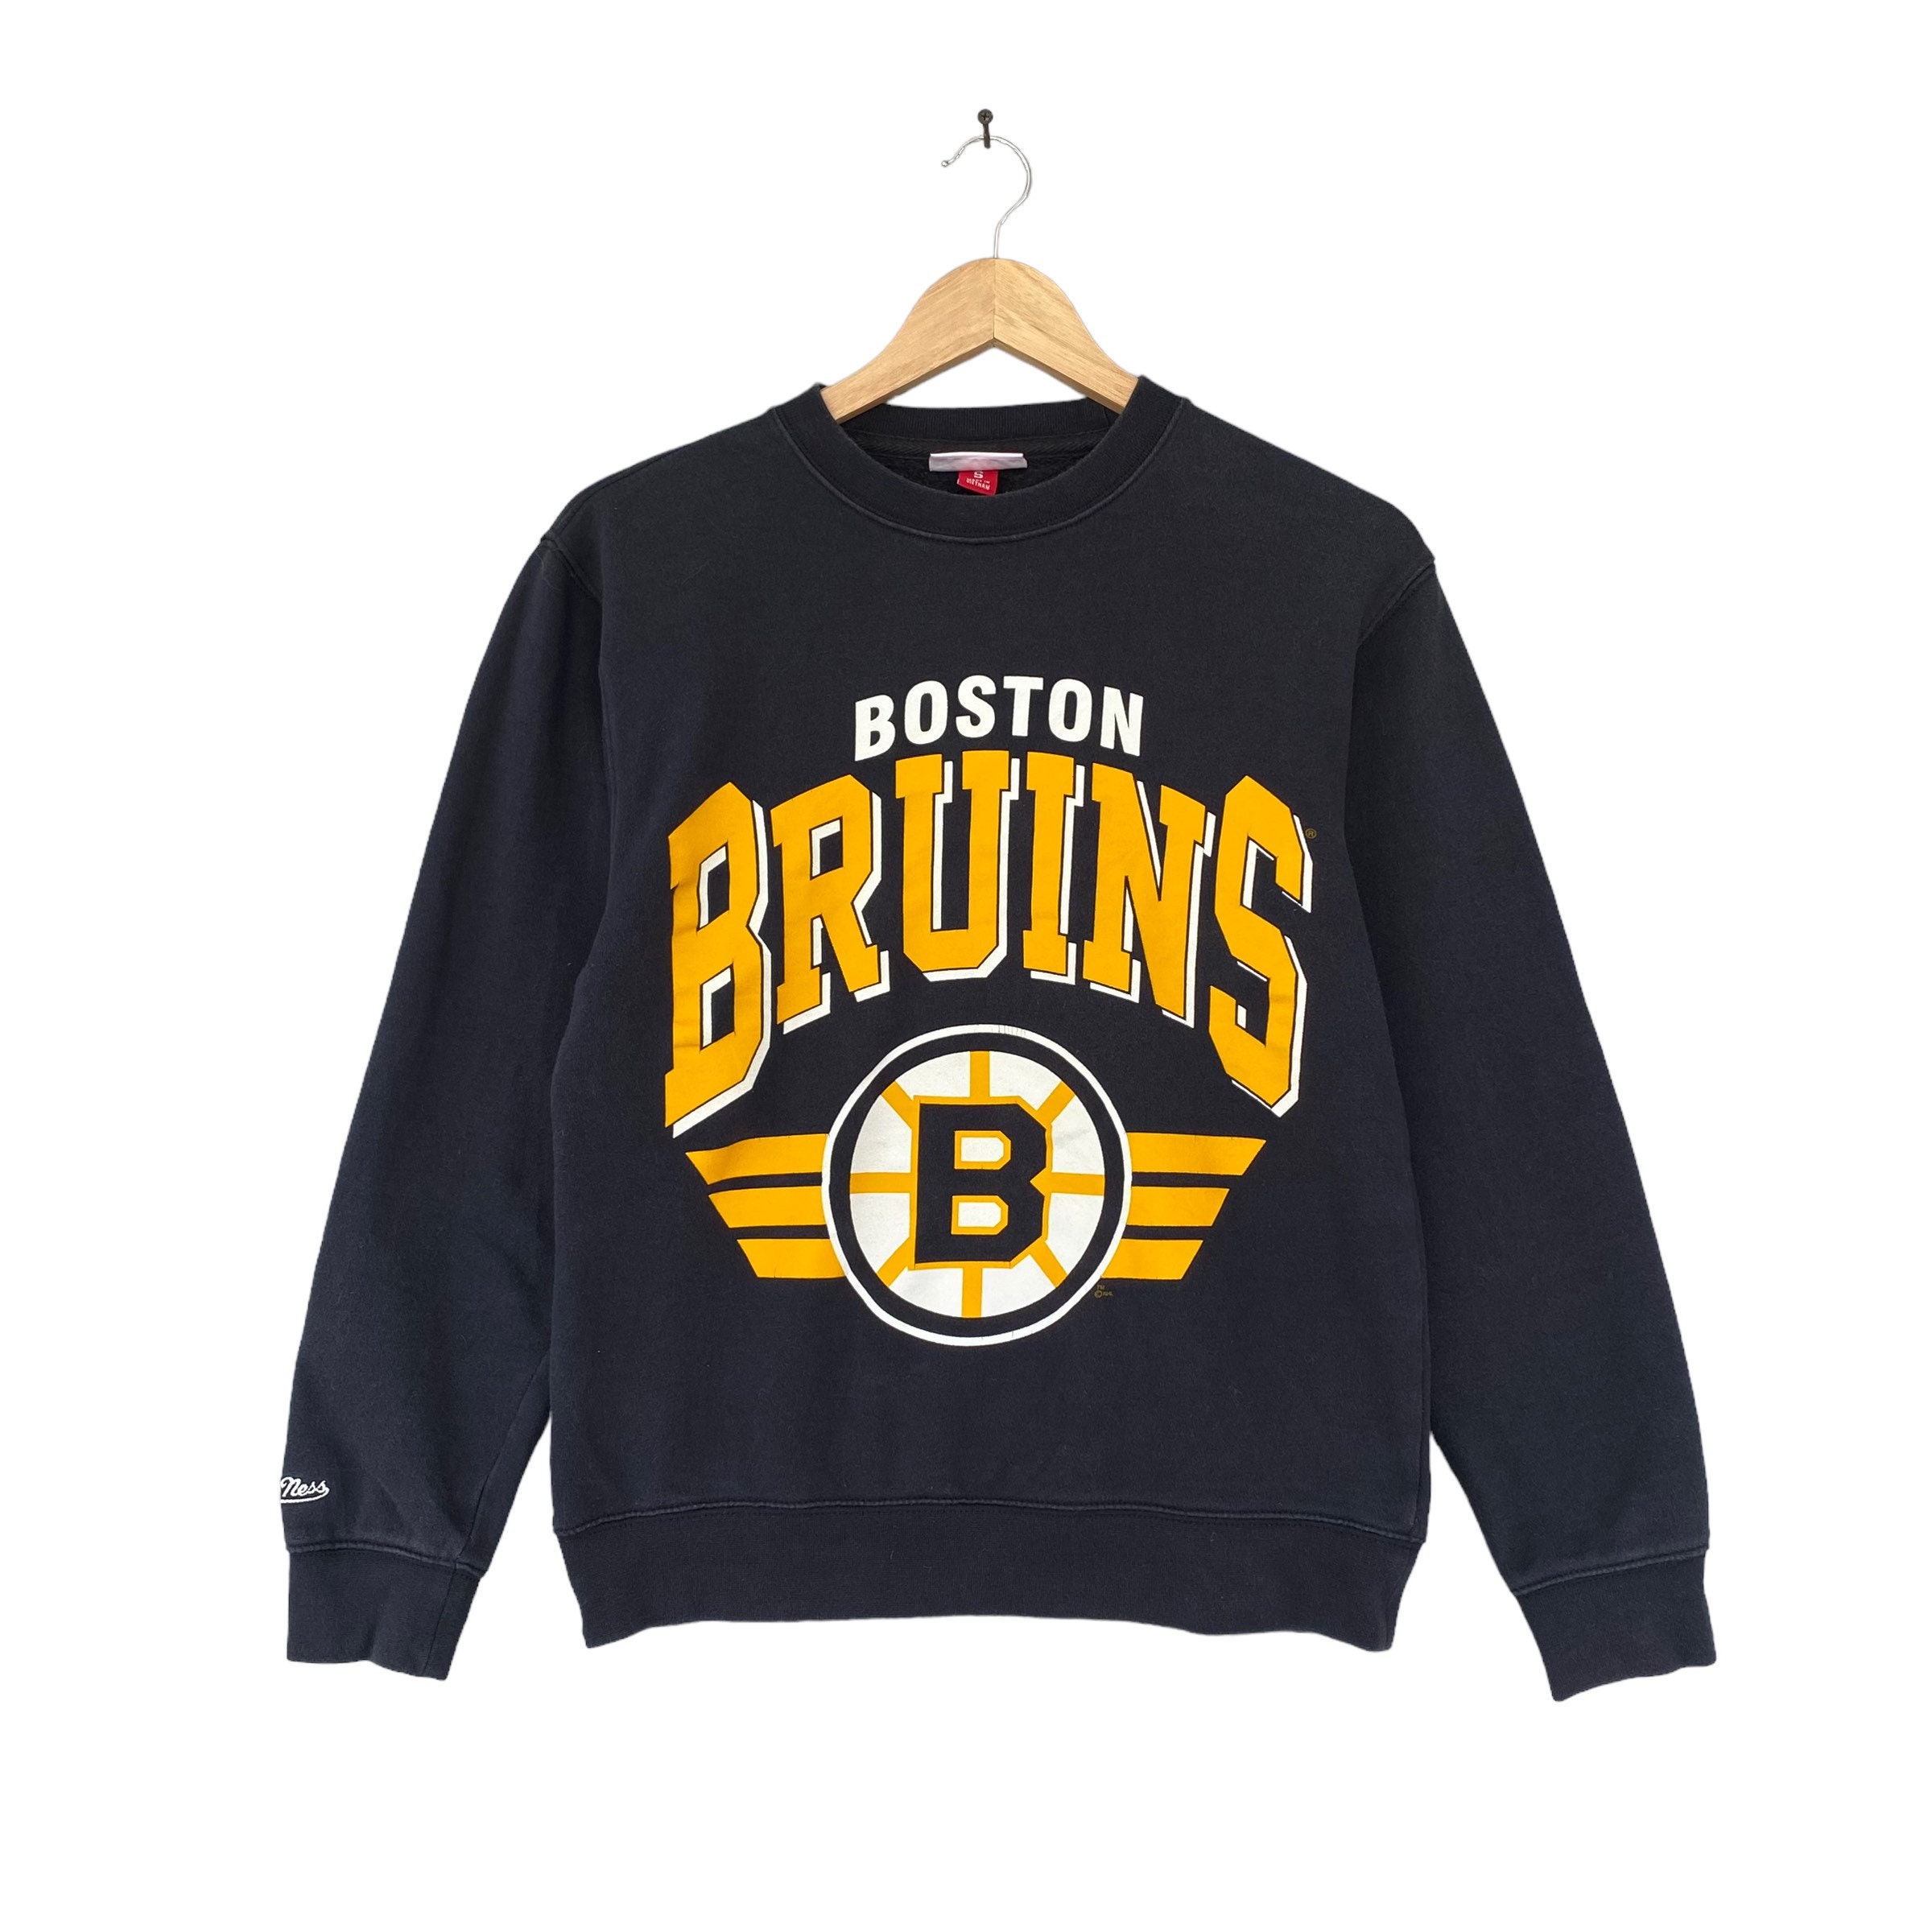 Retro Boston Hockey Players Sweatshirt Vintage-style Bruins 